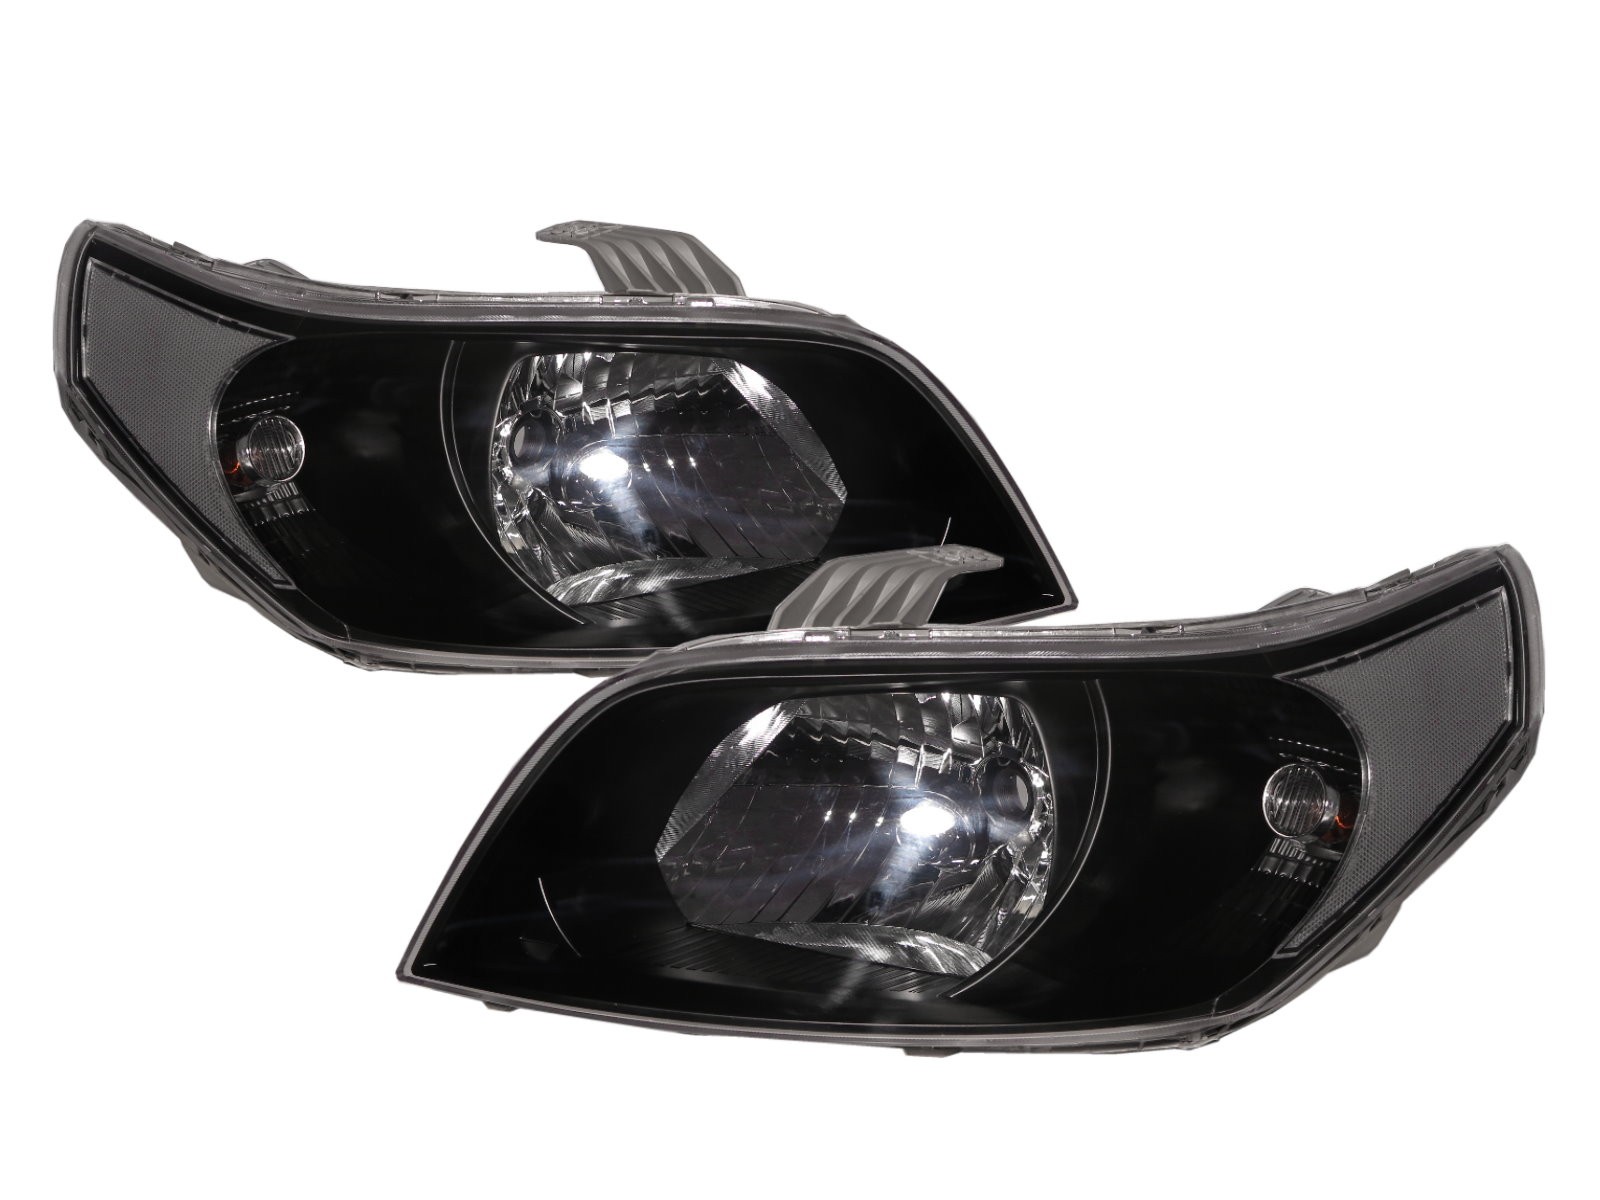 CrazyTheGod Gentra X 2009-2011 FACELIFT Hatchback 5D Clear Headlight Headlamp Black for DAEWOO LHD